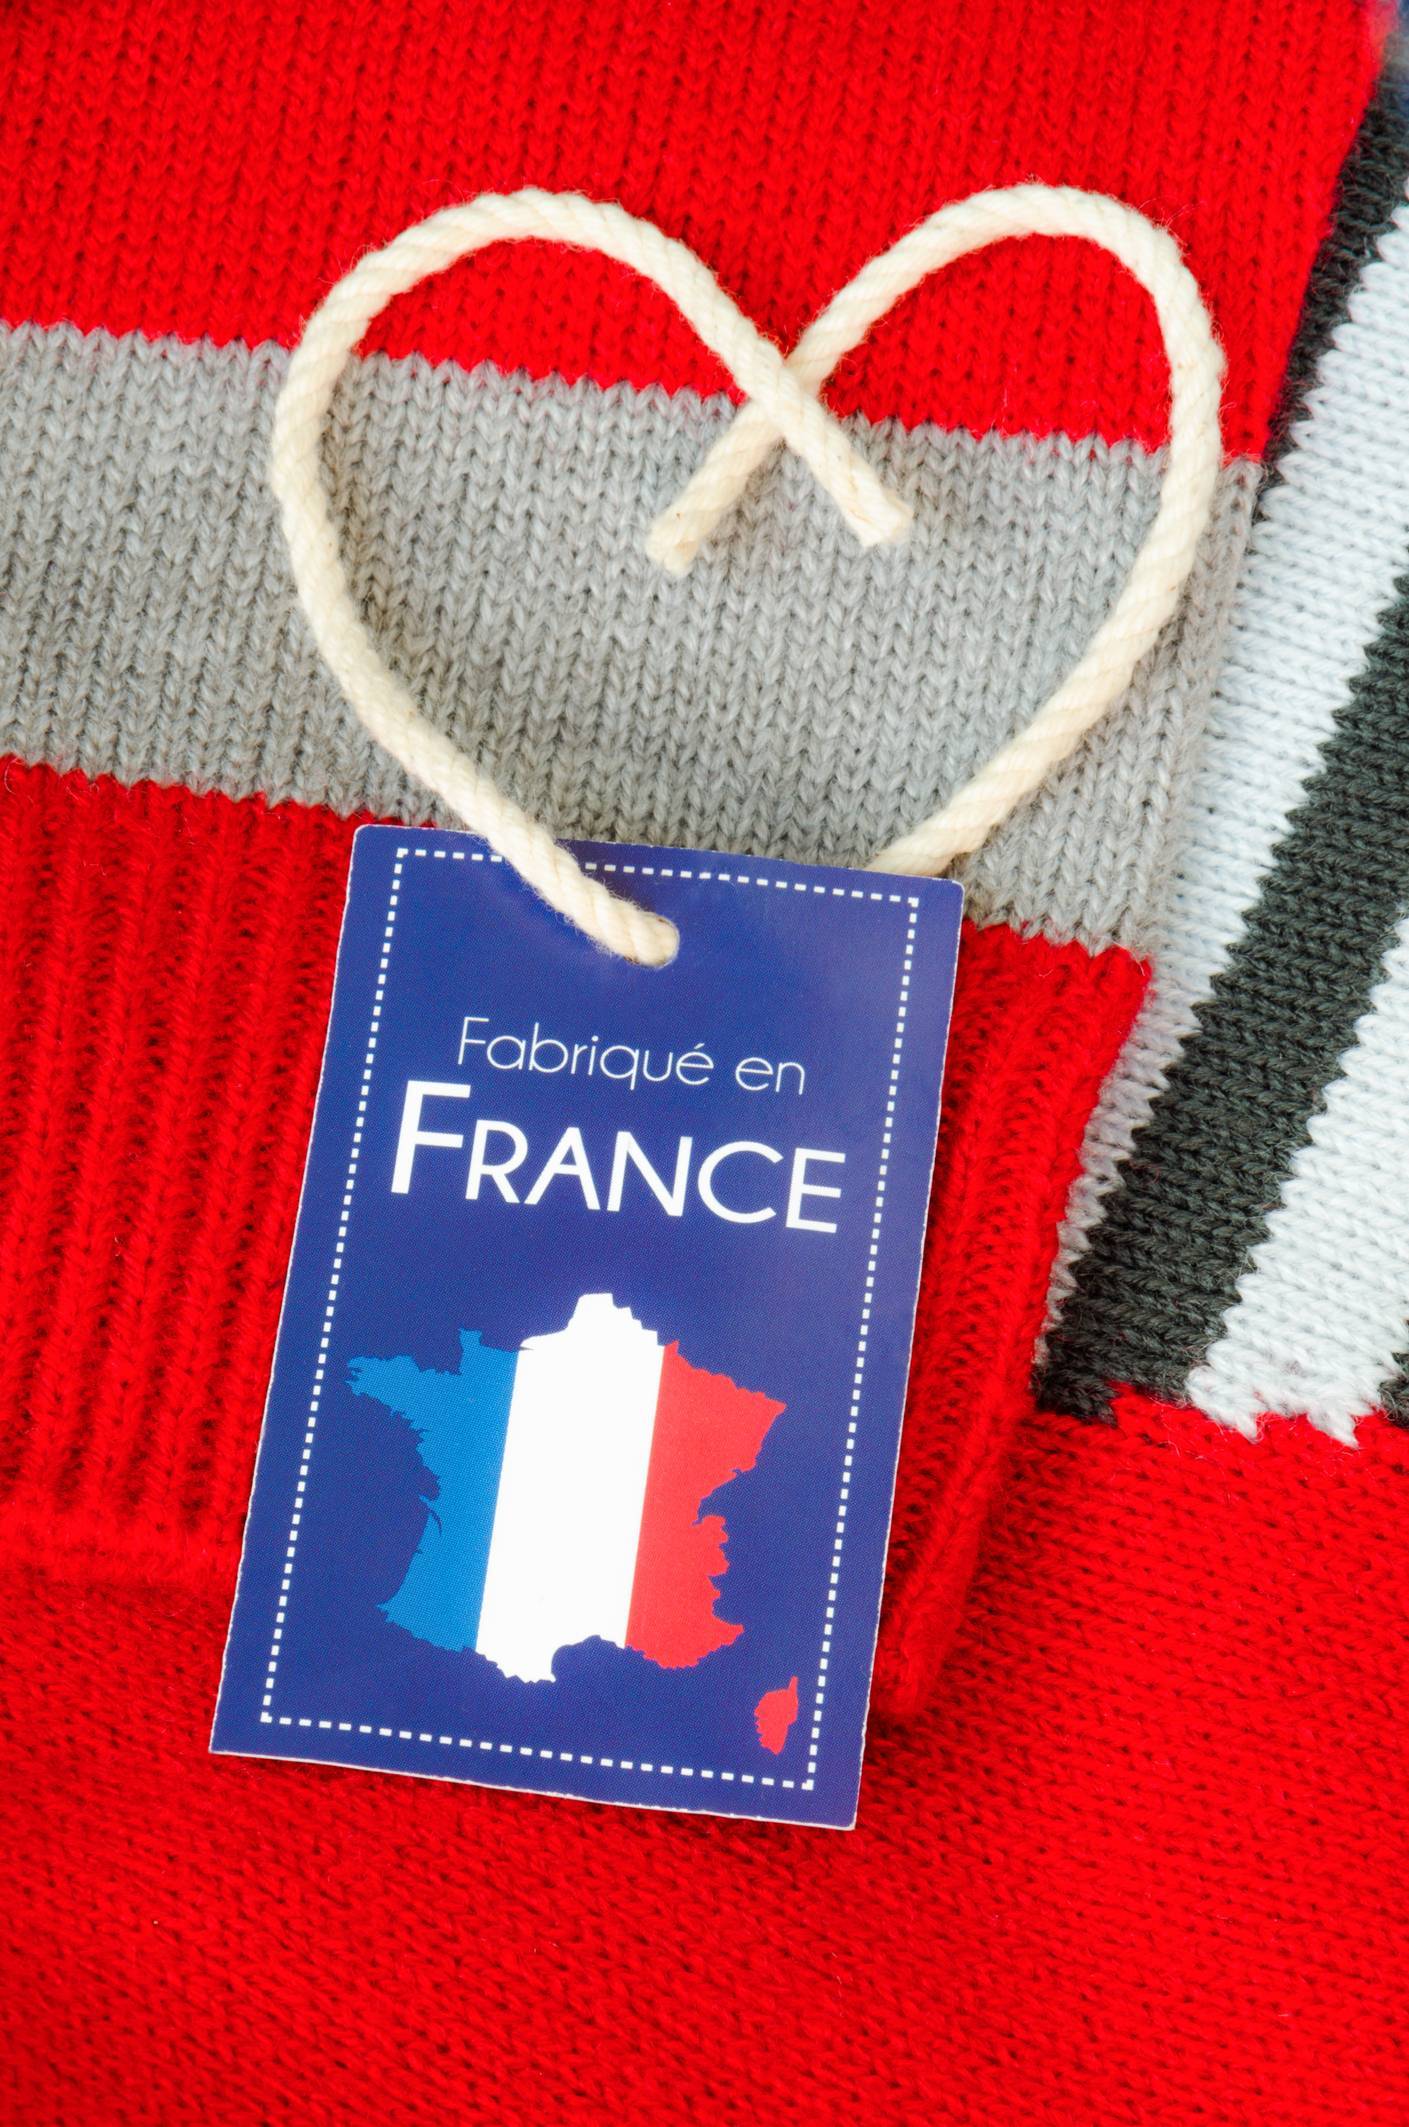 Des produits made in France